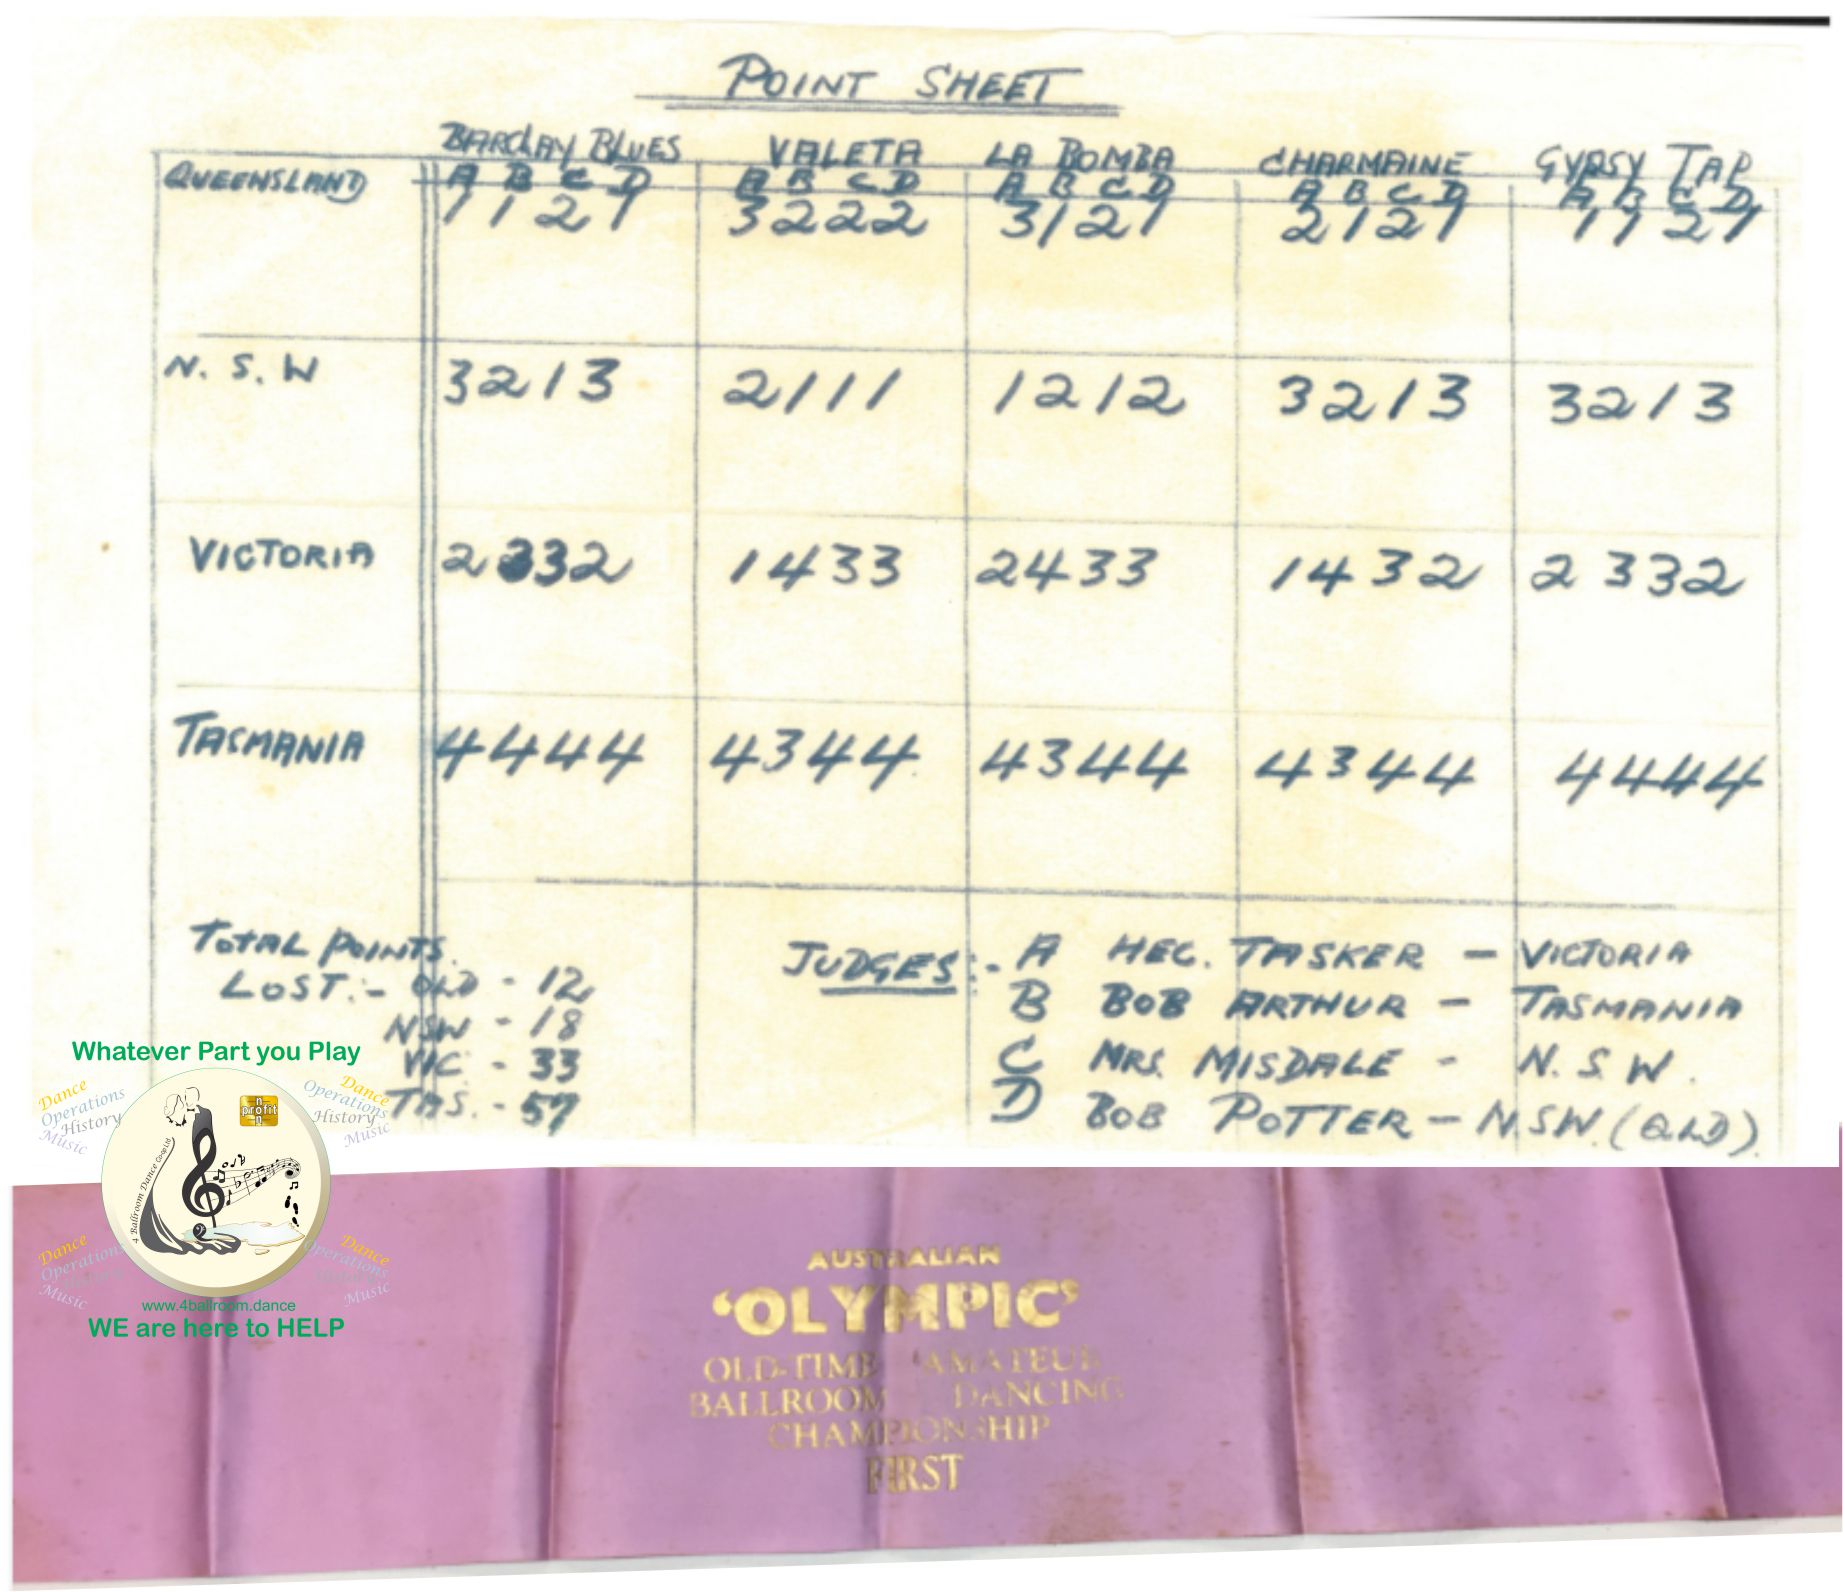 1956 Australasian Dance Championships sash and point sheet 